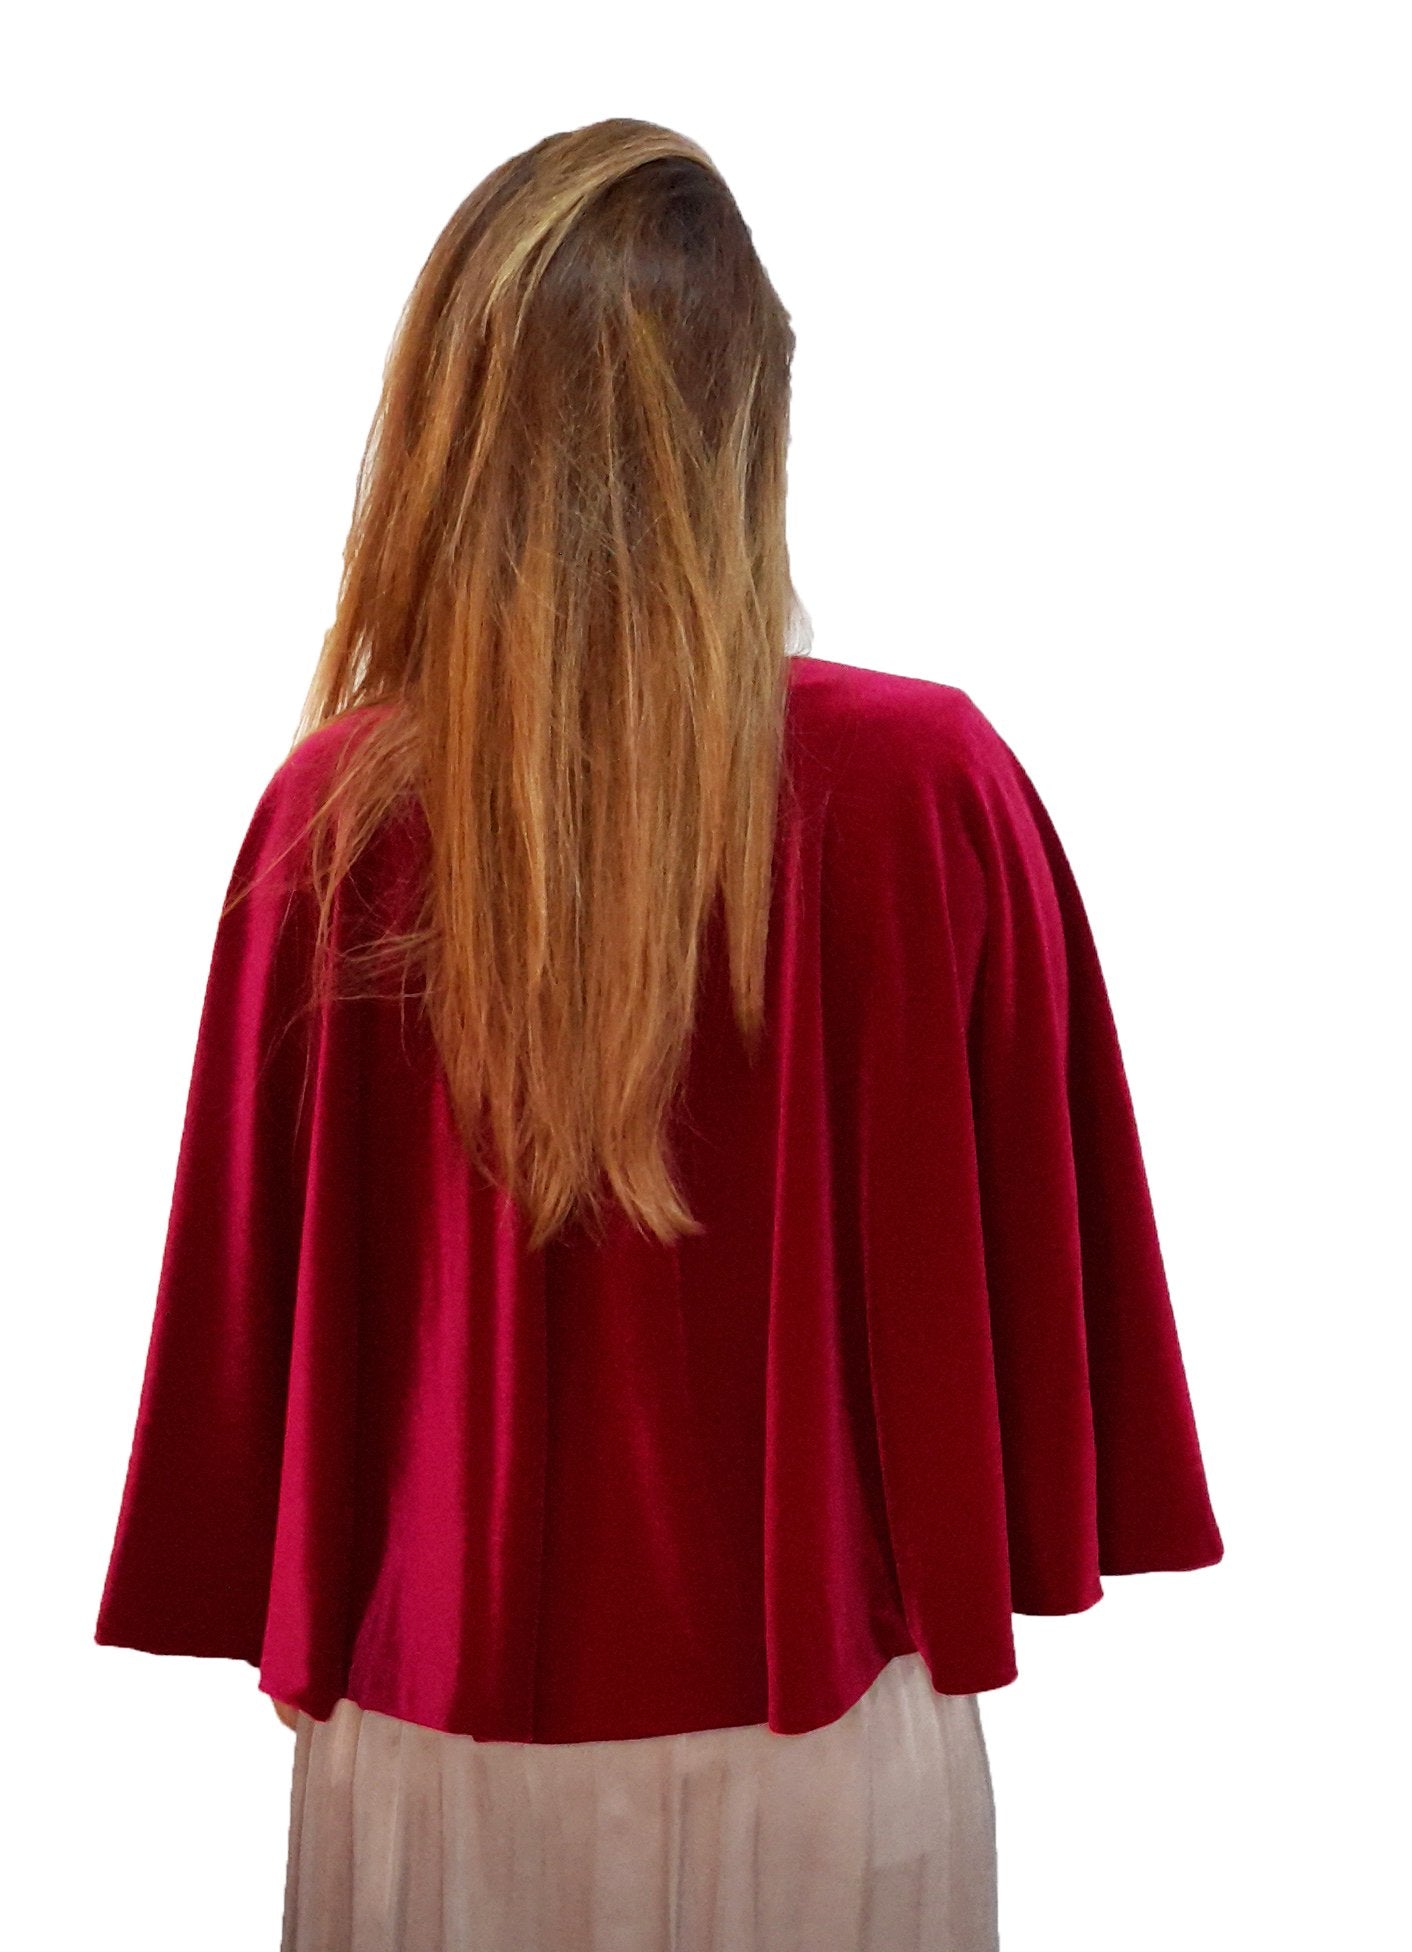 Capa de Terciopelo · Rojo Frambuesa con Aplique Negro